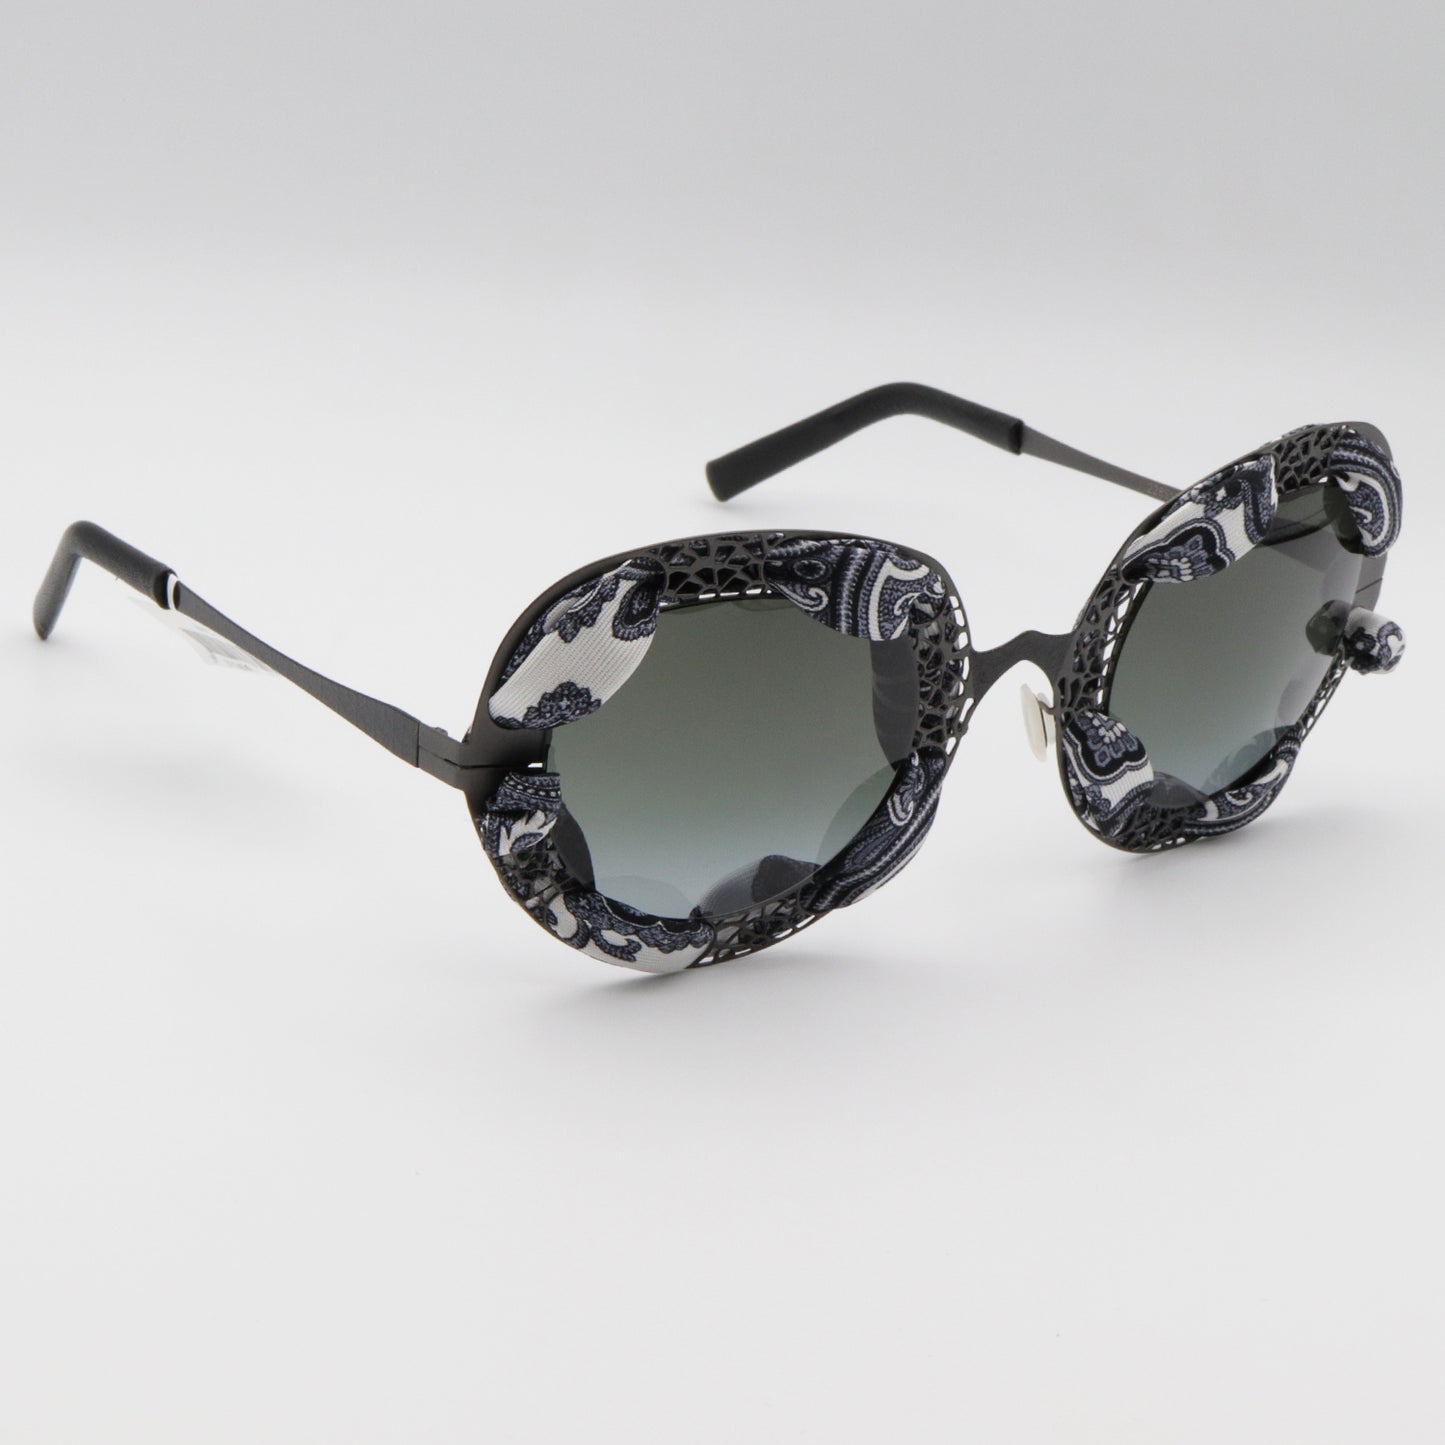 228s Pugnale & Nyleve Black and White Sunglasses